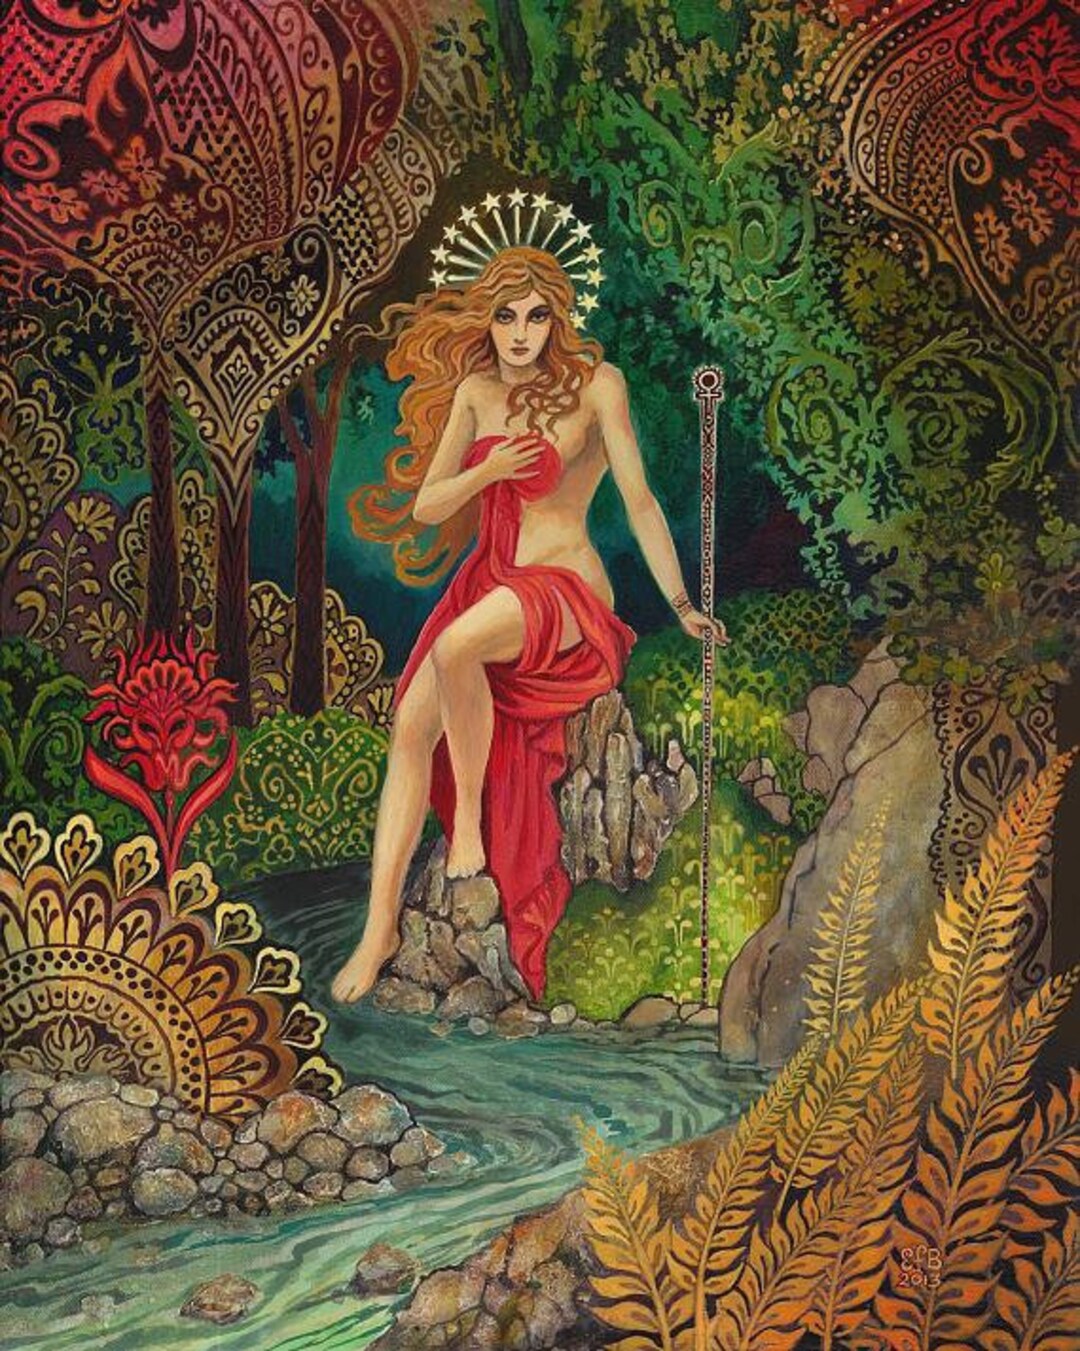 Empress Tarot Gypsy Goddess Art Nouveau 11x14 Giclée Print on Canvas ...